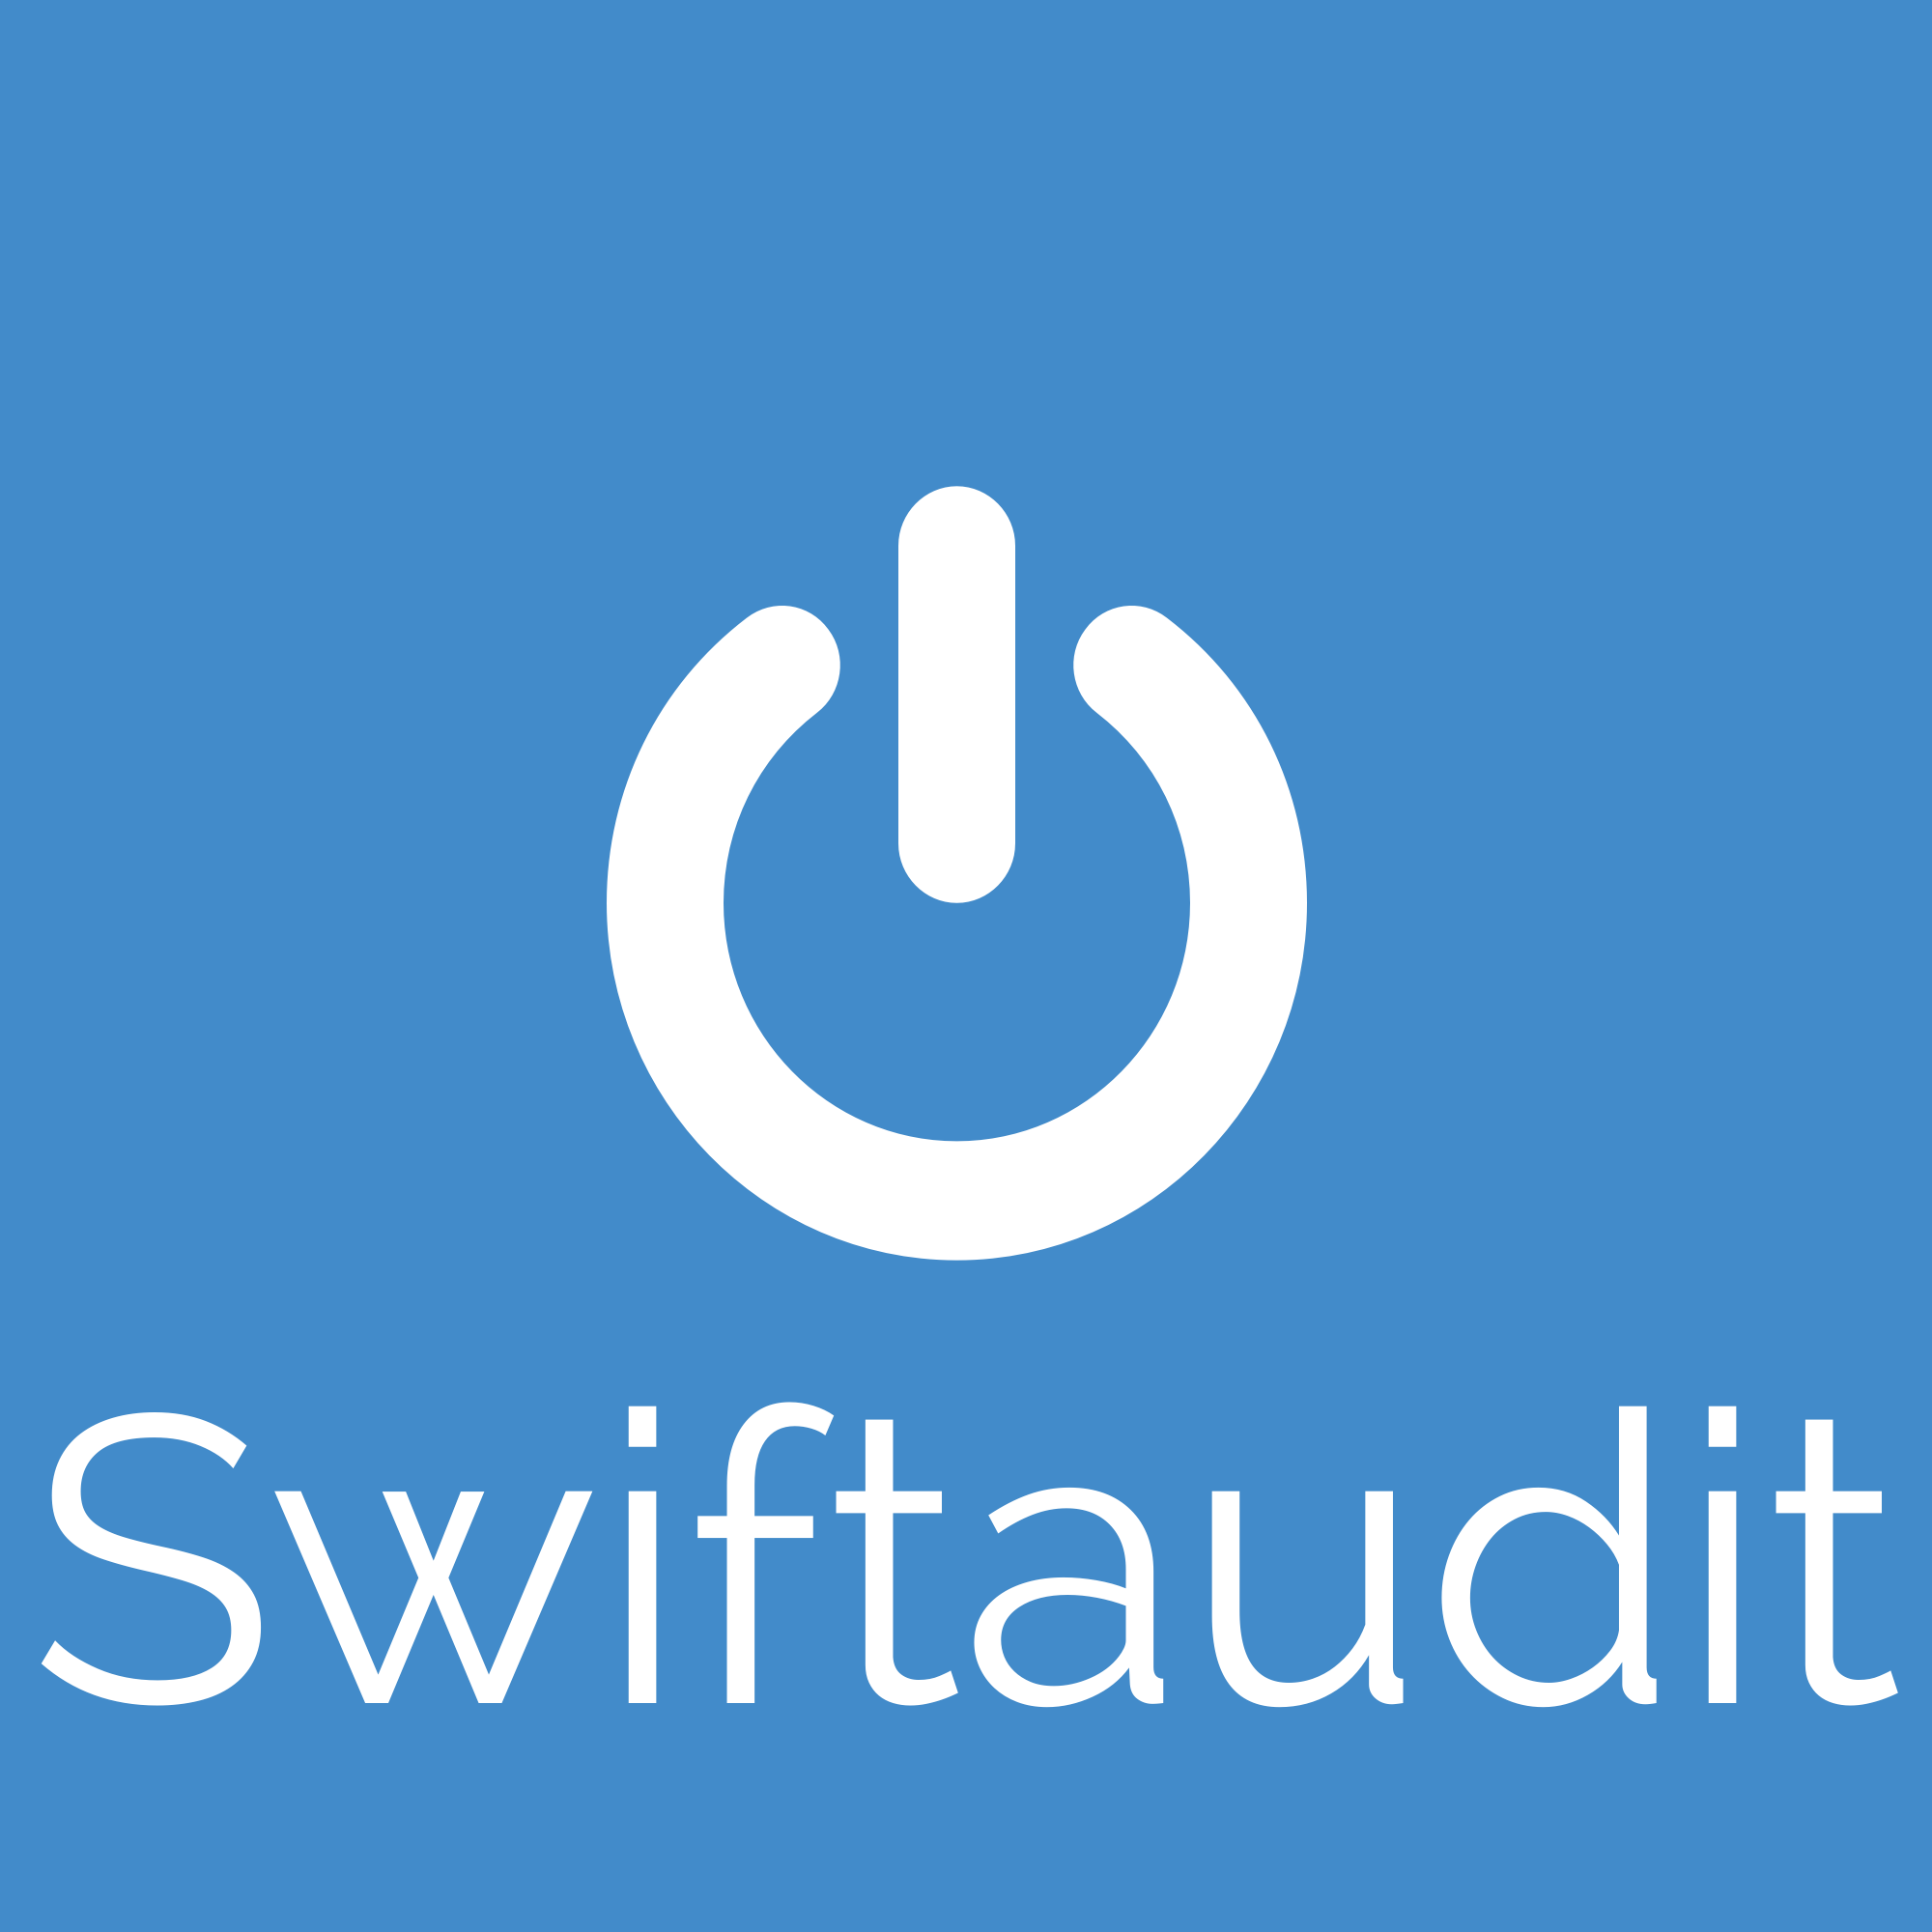 Spuare White and Blue Logo - Swiftaudit